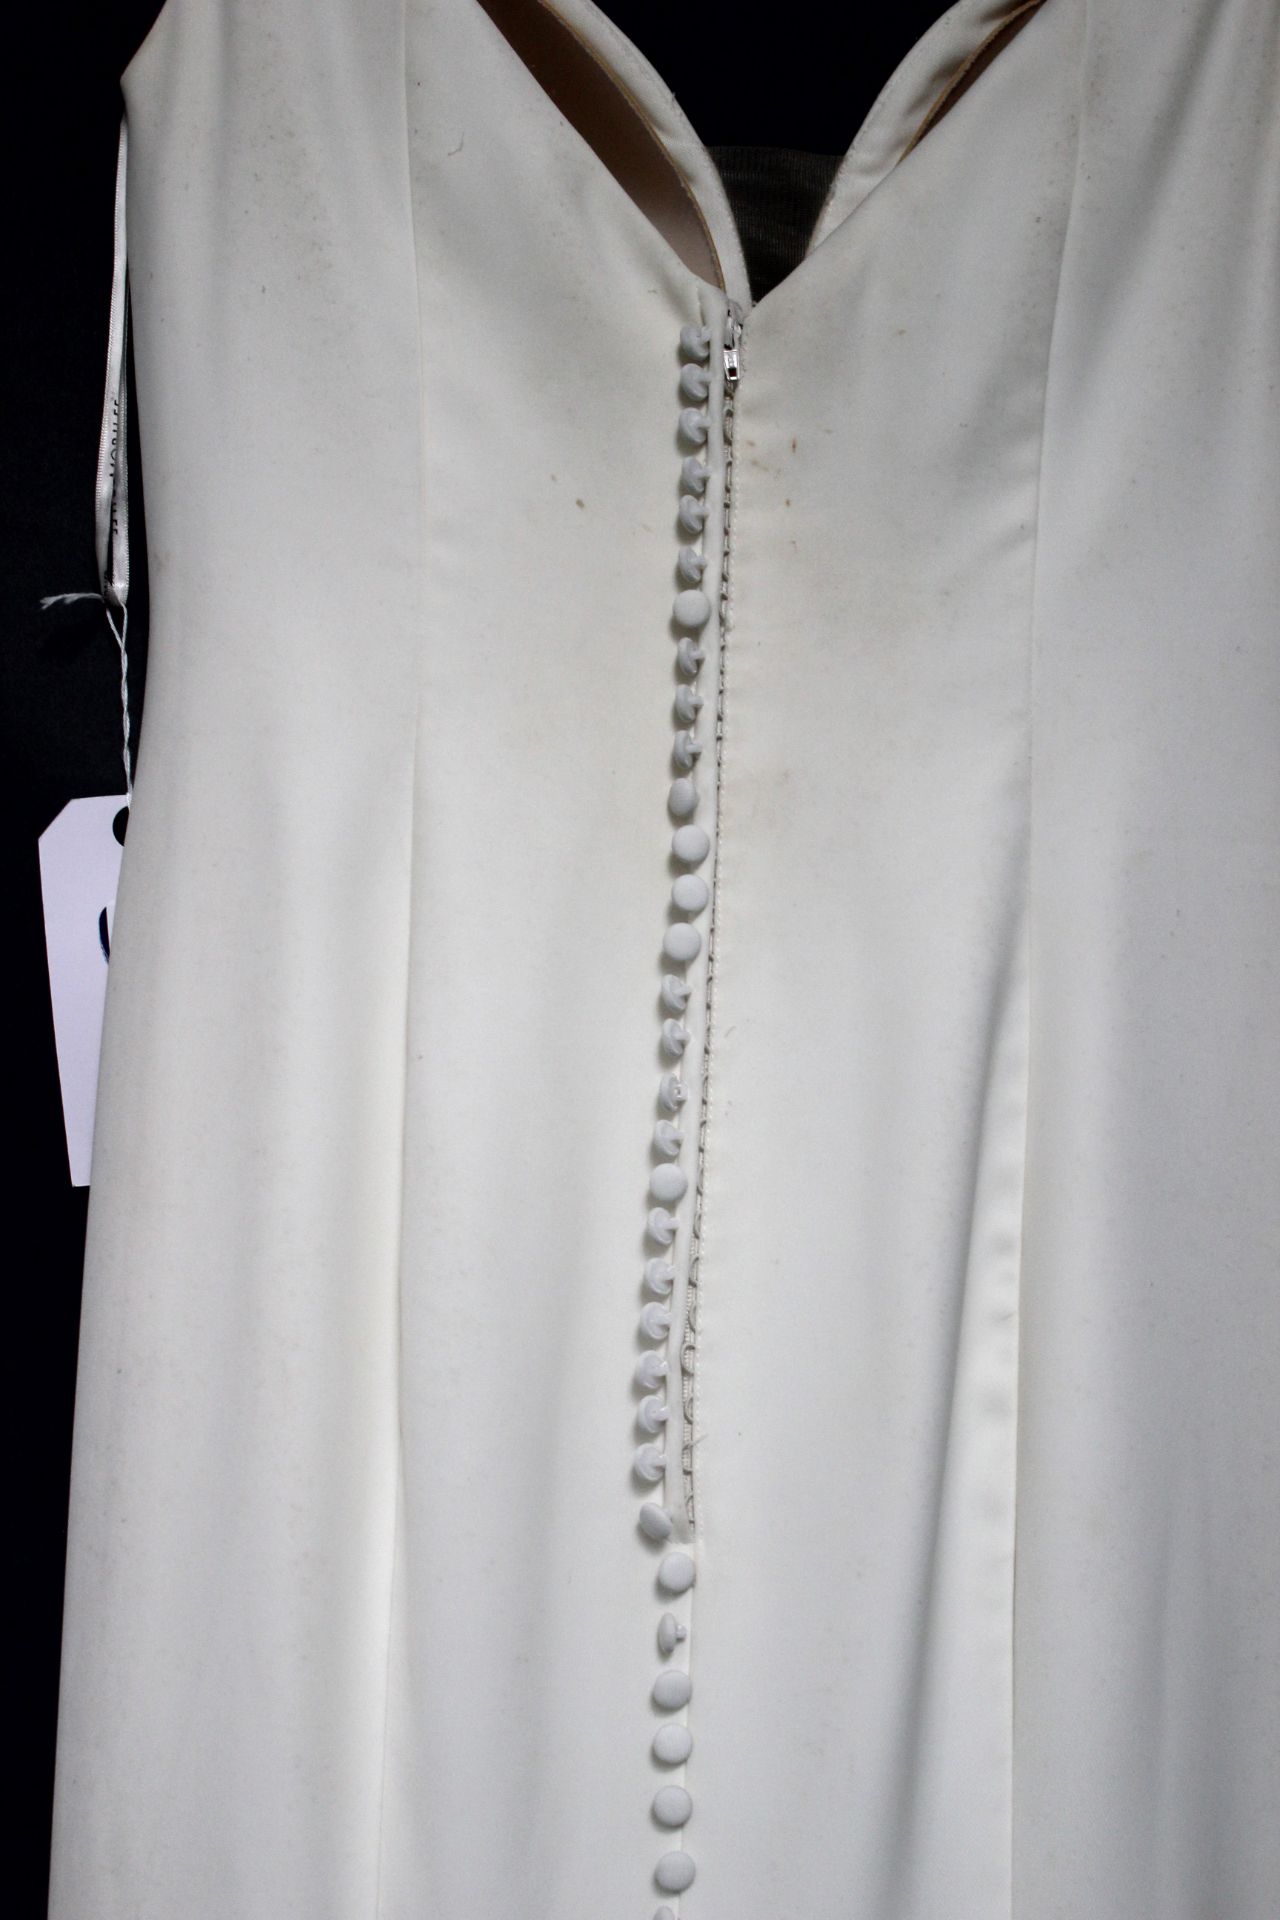 1 x MORI LEE Satin Fishtail Sweetheart Neckline Designer Wedding Dress RRP £1,050 UK12 - Image 2 of 6